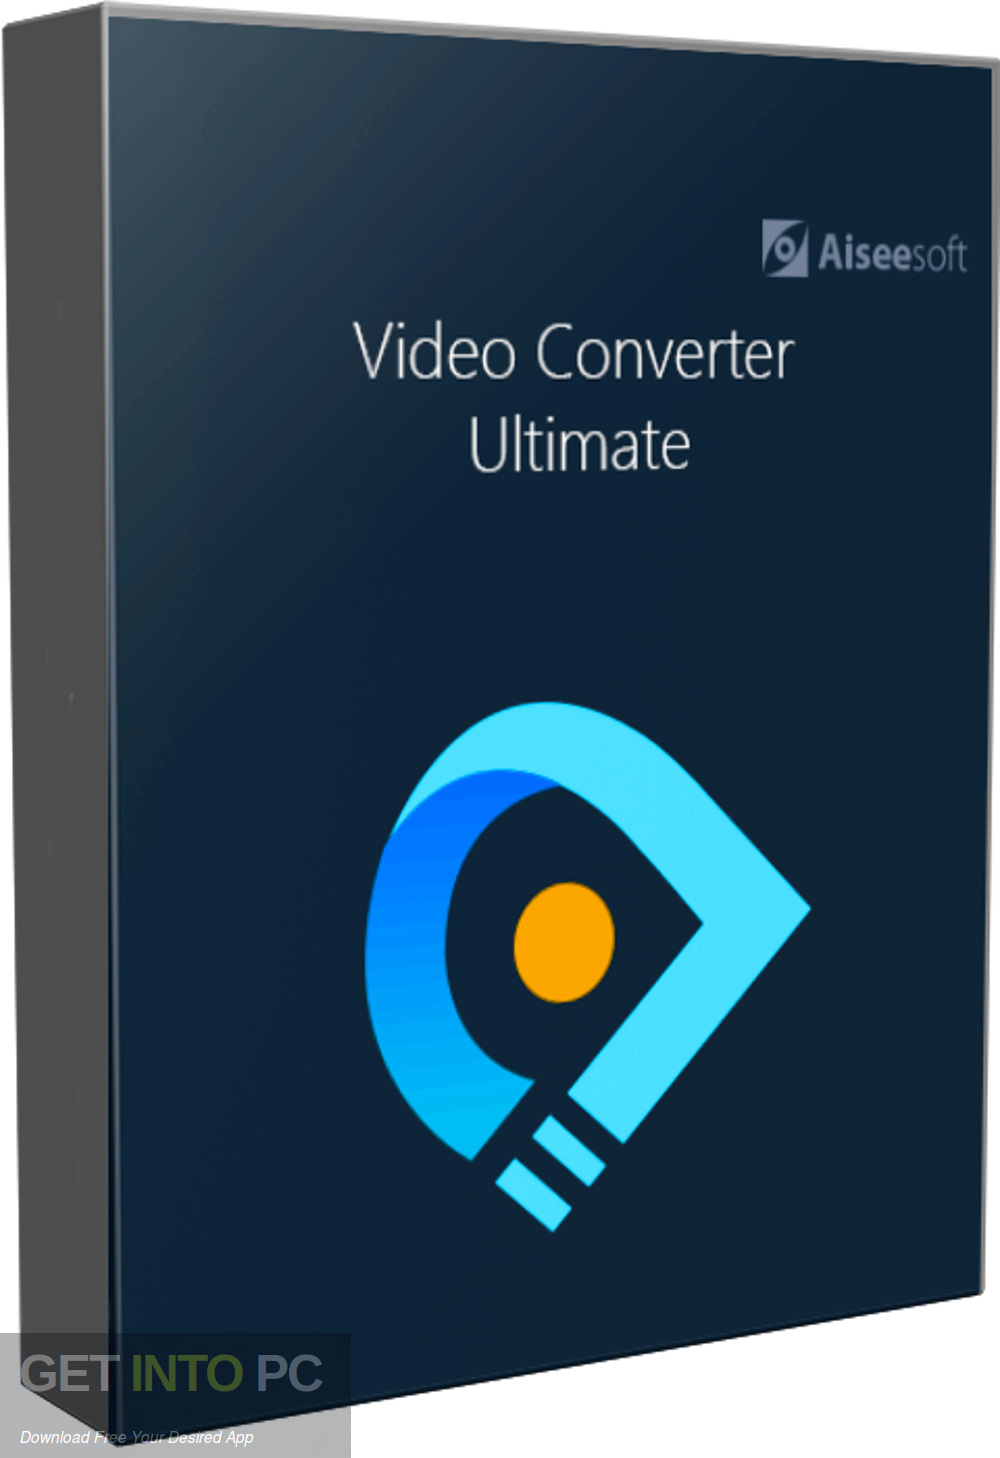 Aiseesoft Video Converter Ultimate Free Download GetintoPC.com